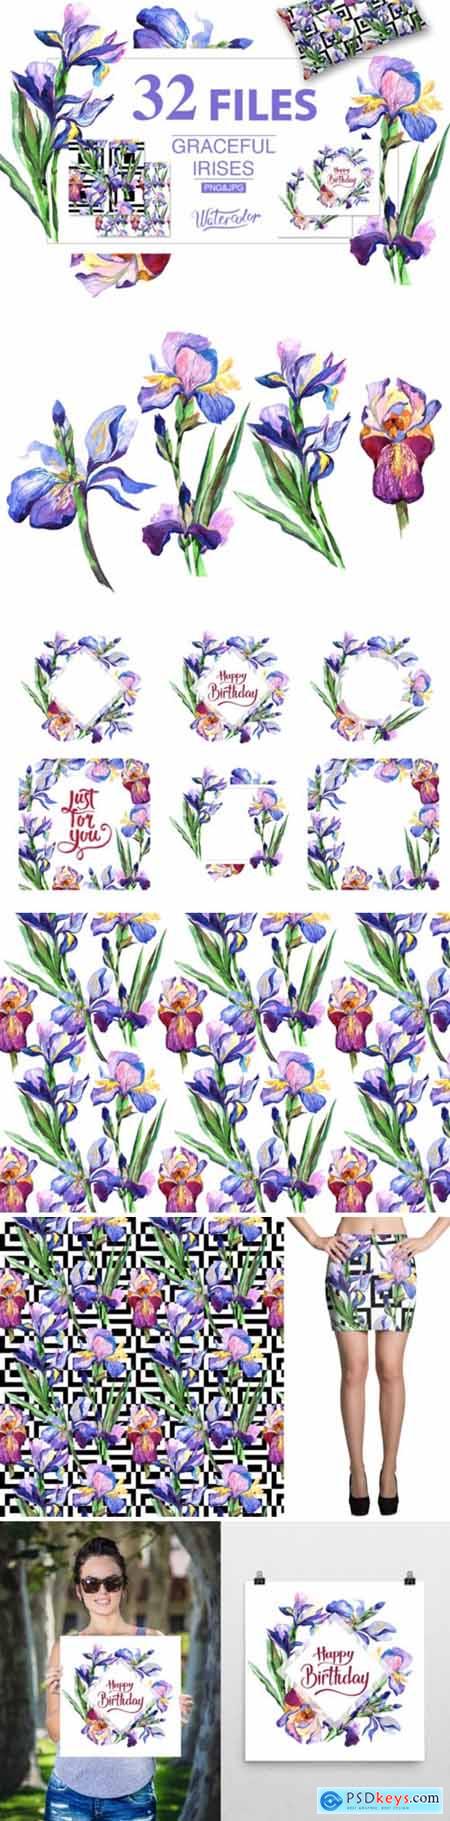 Blue Irises Watercolor Flowers 1881578